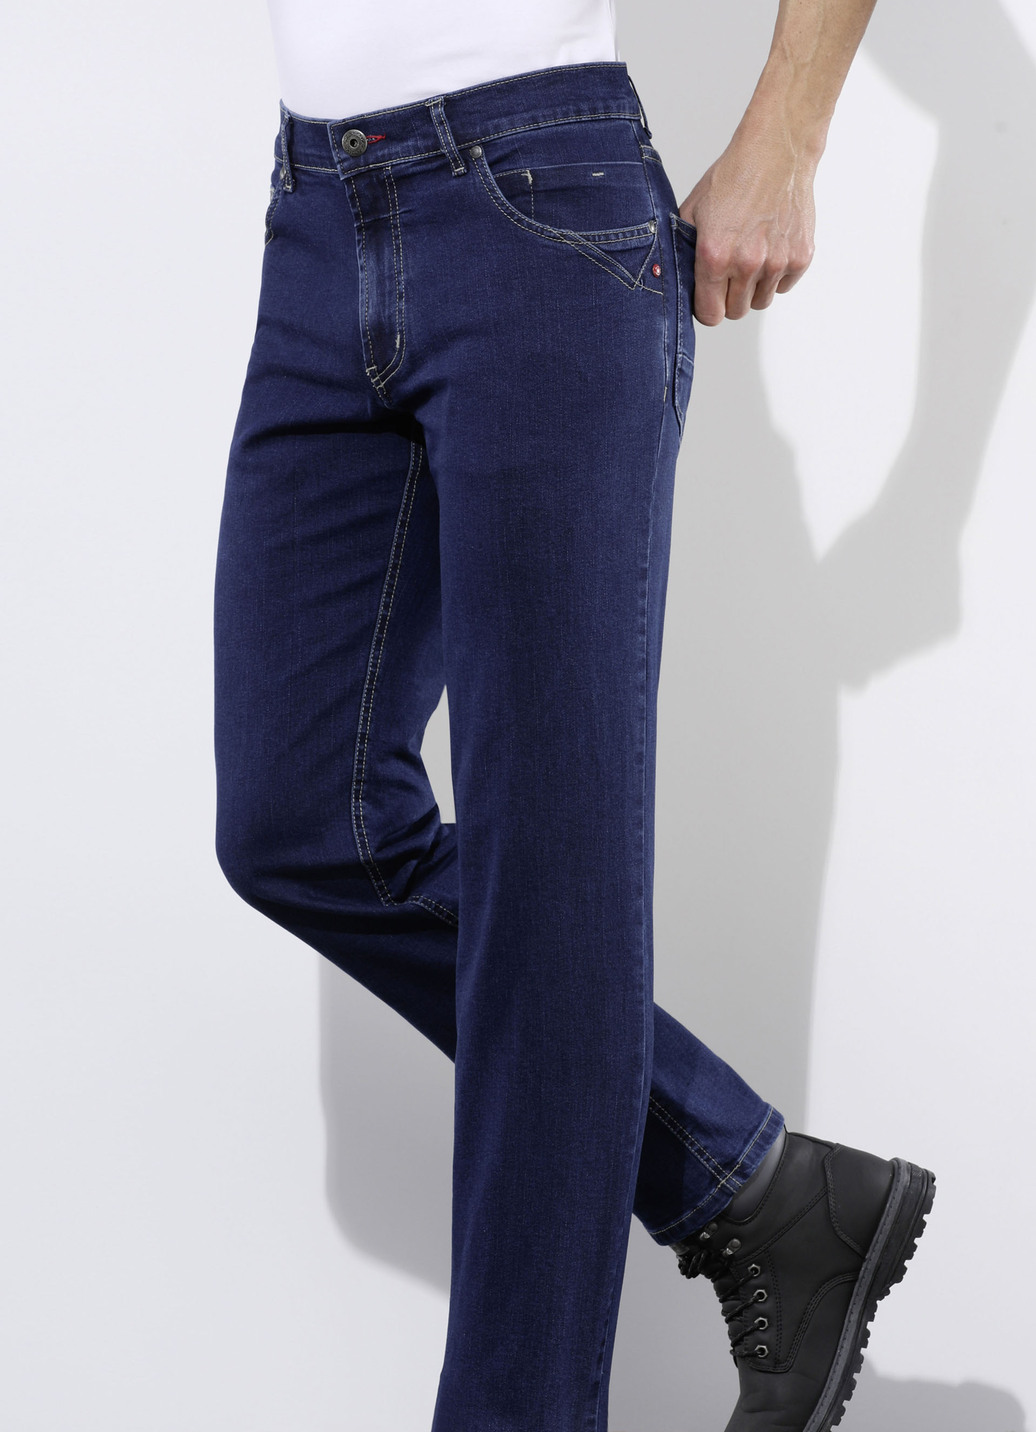 "Francesco Botti"-Jeans in 3 Farben, Dunkelblau, Größe 30 von FRANCESCO BOTTI